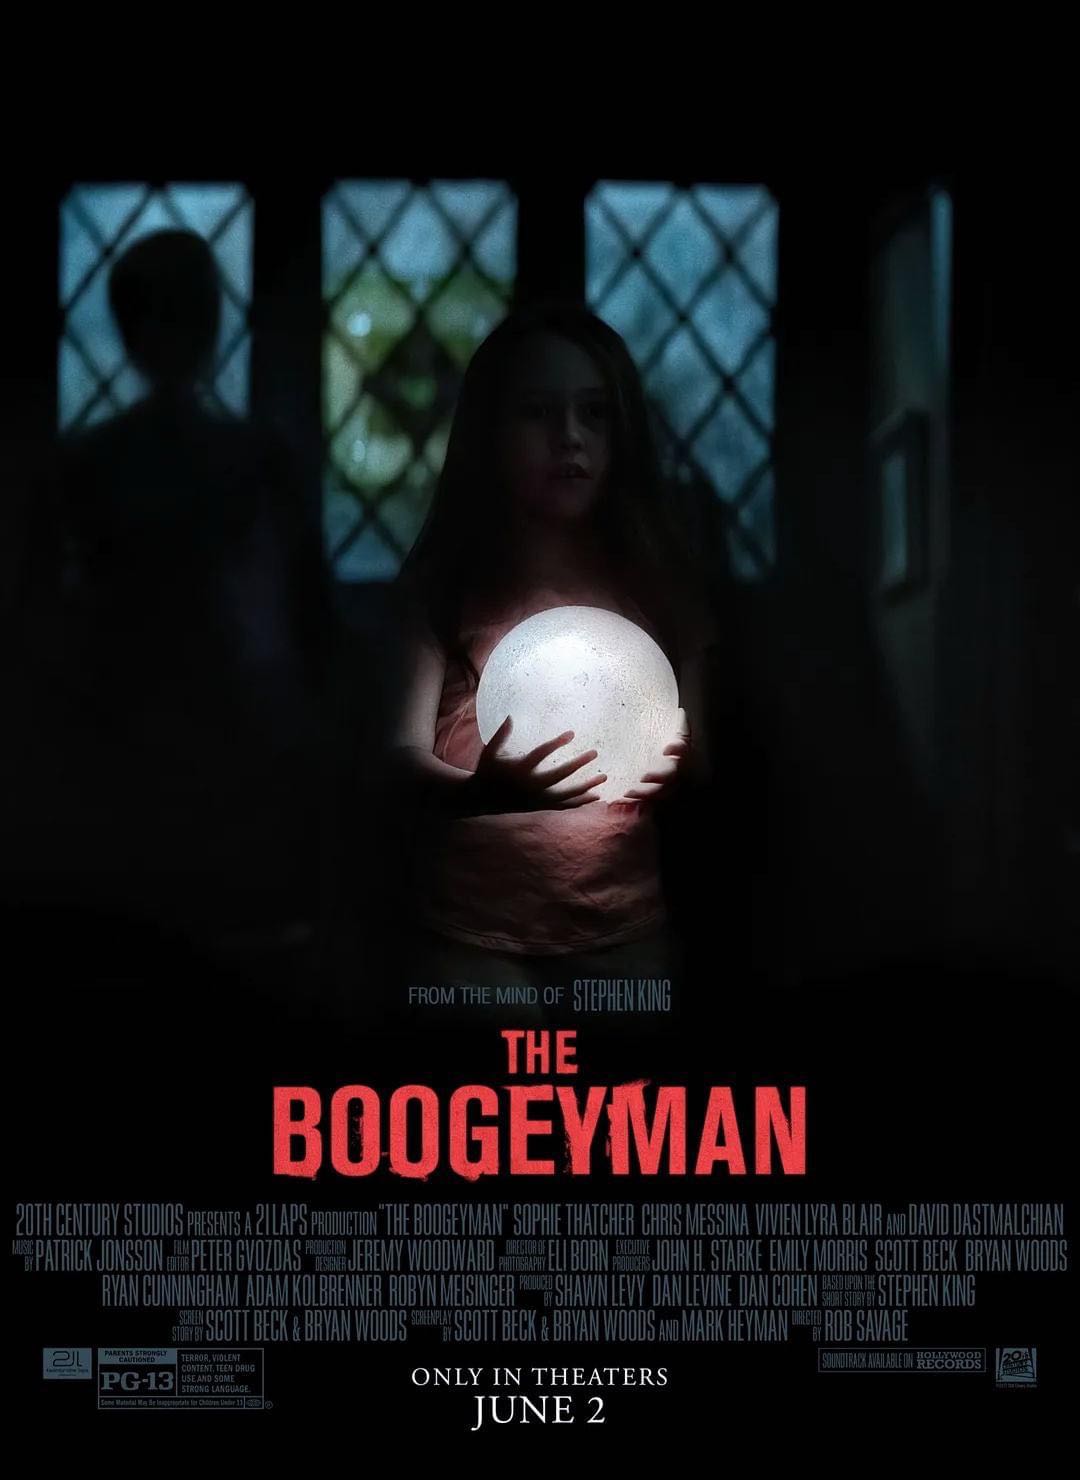 THE BOOGEYMAN (7.5/10) หนังสยองขวัญเรื่องใหม่ จากเรื่องสั้น สตีเวน คิง